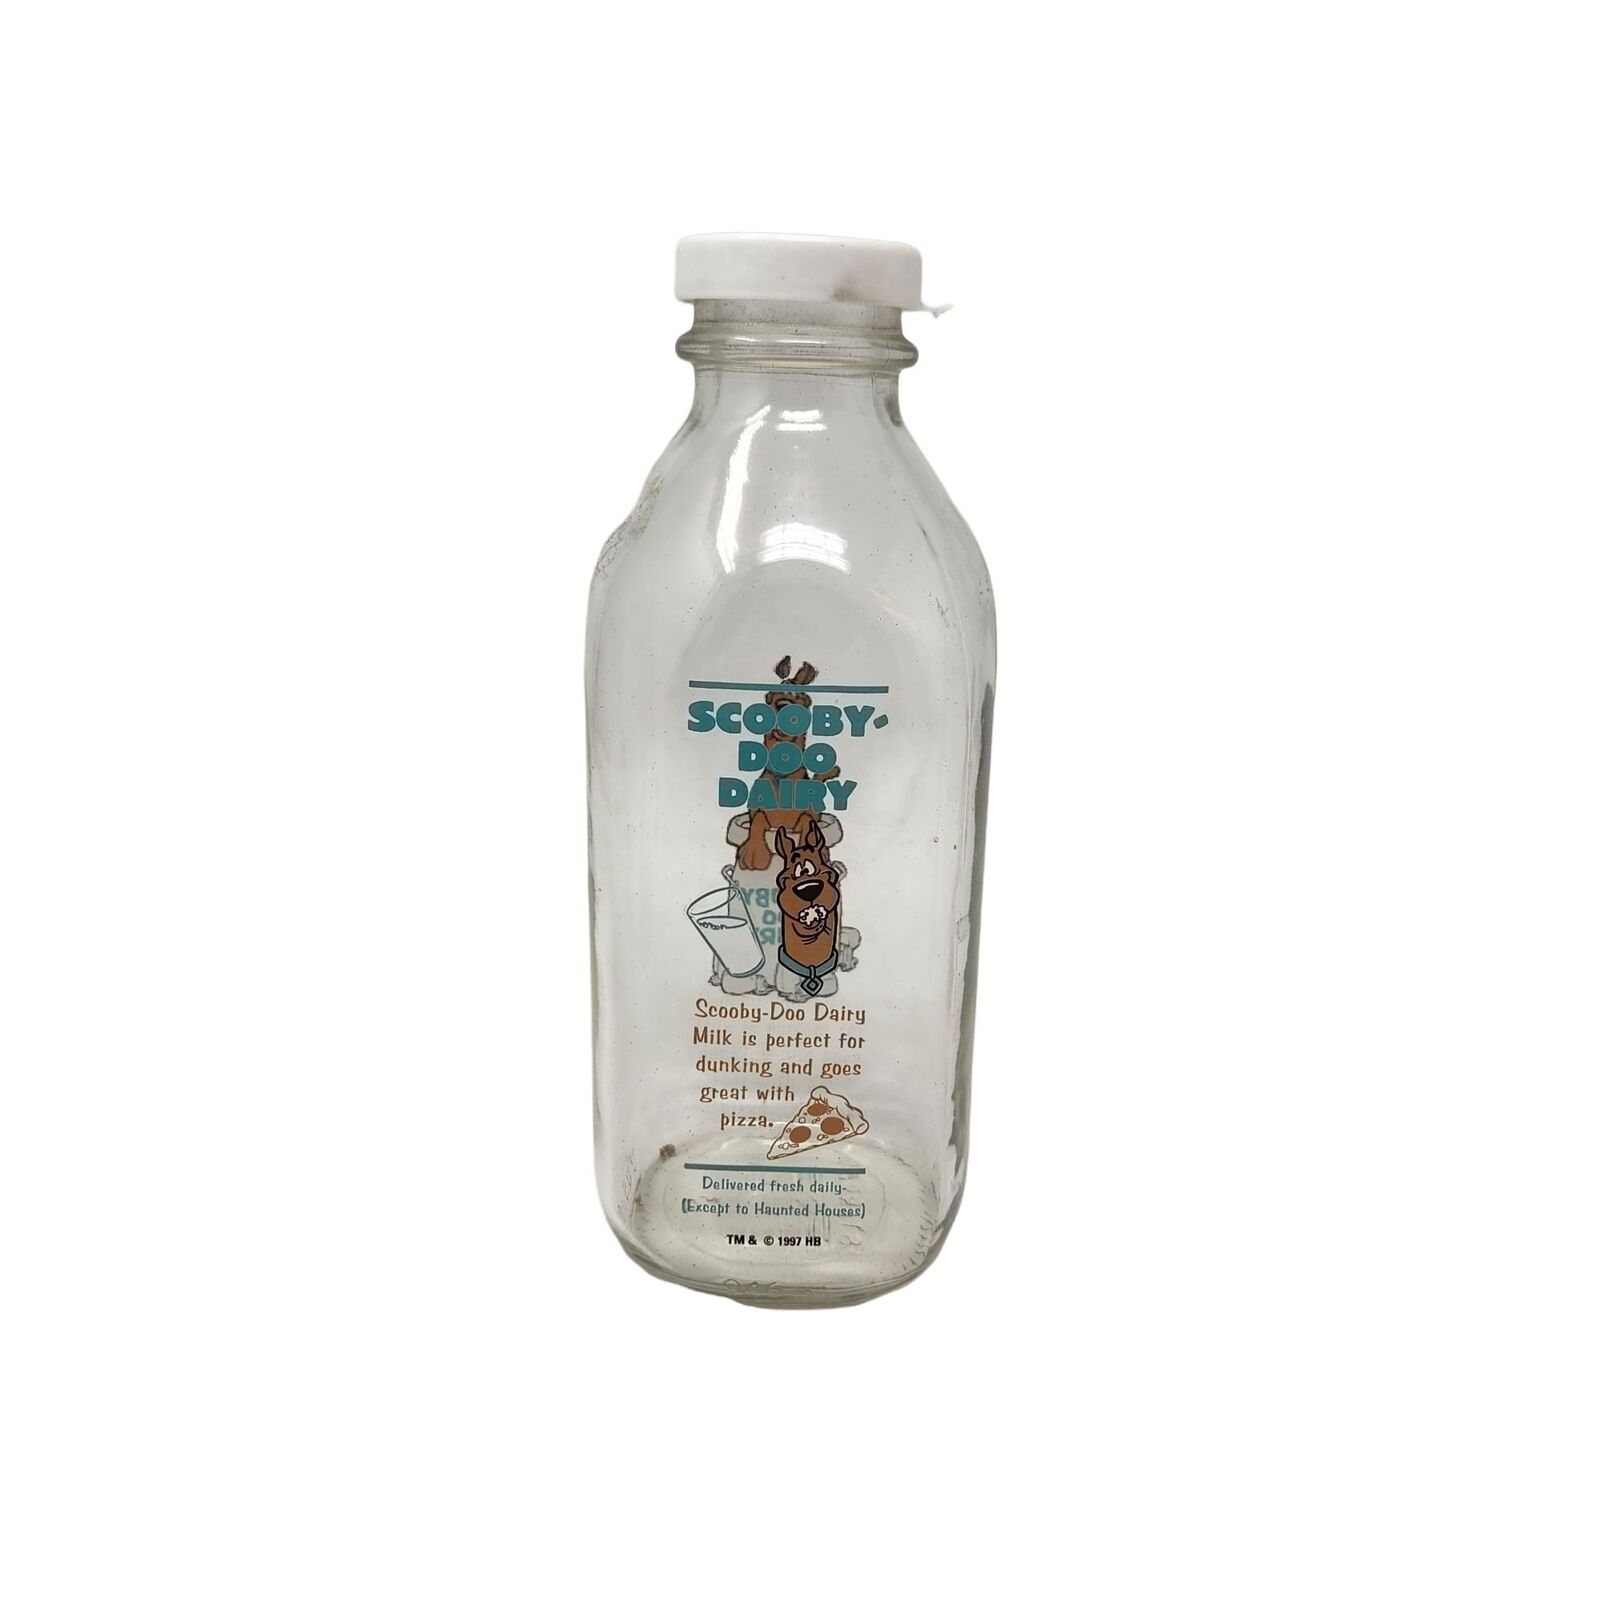 Vintage 1997 Scooby Doo Dairy Milk Glass Bottle Drink With Cap Cartoon Network